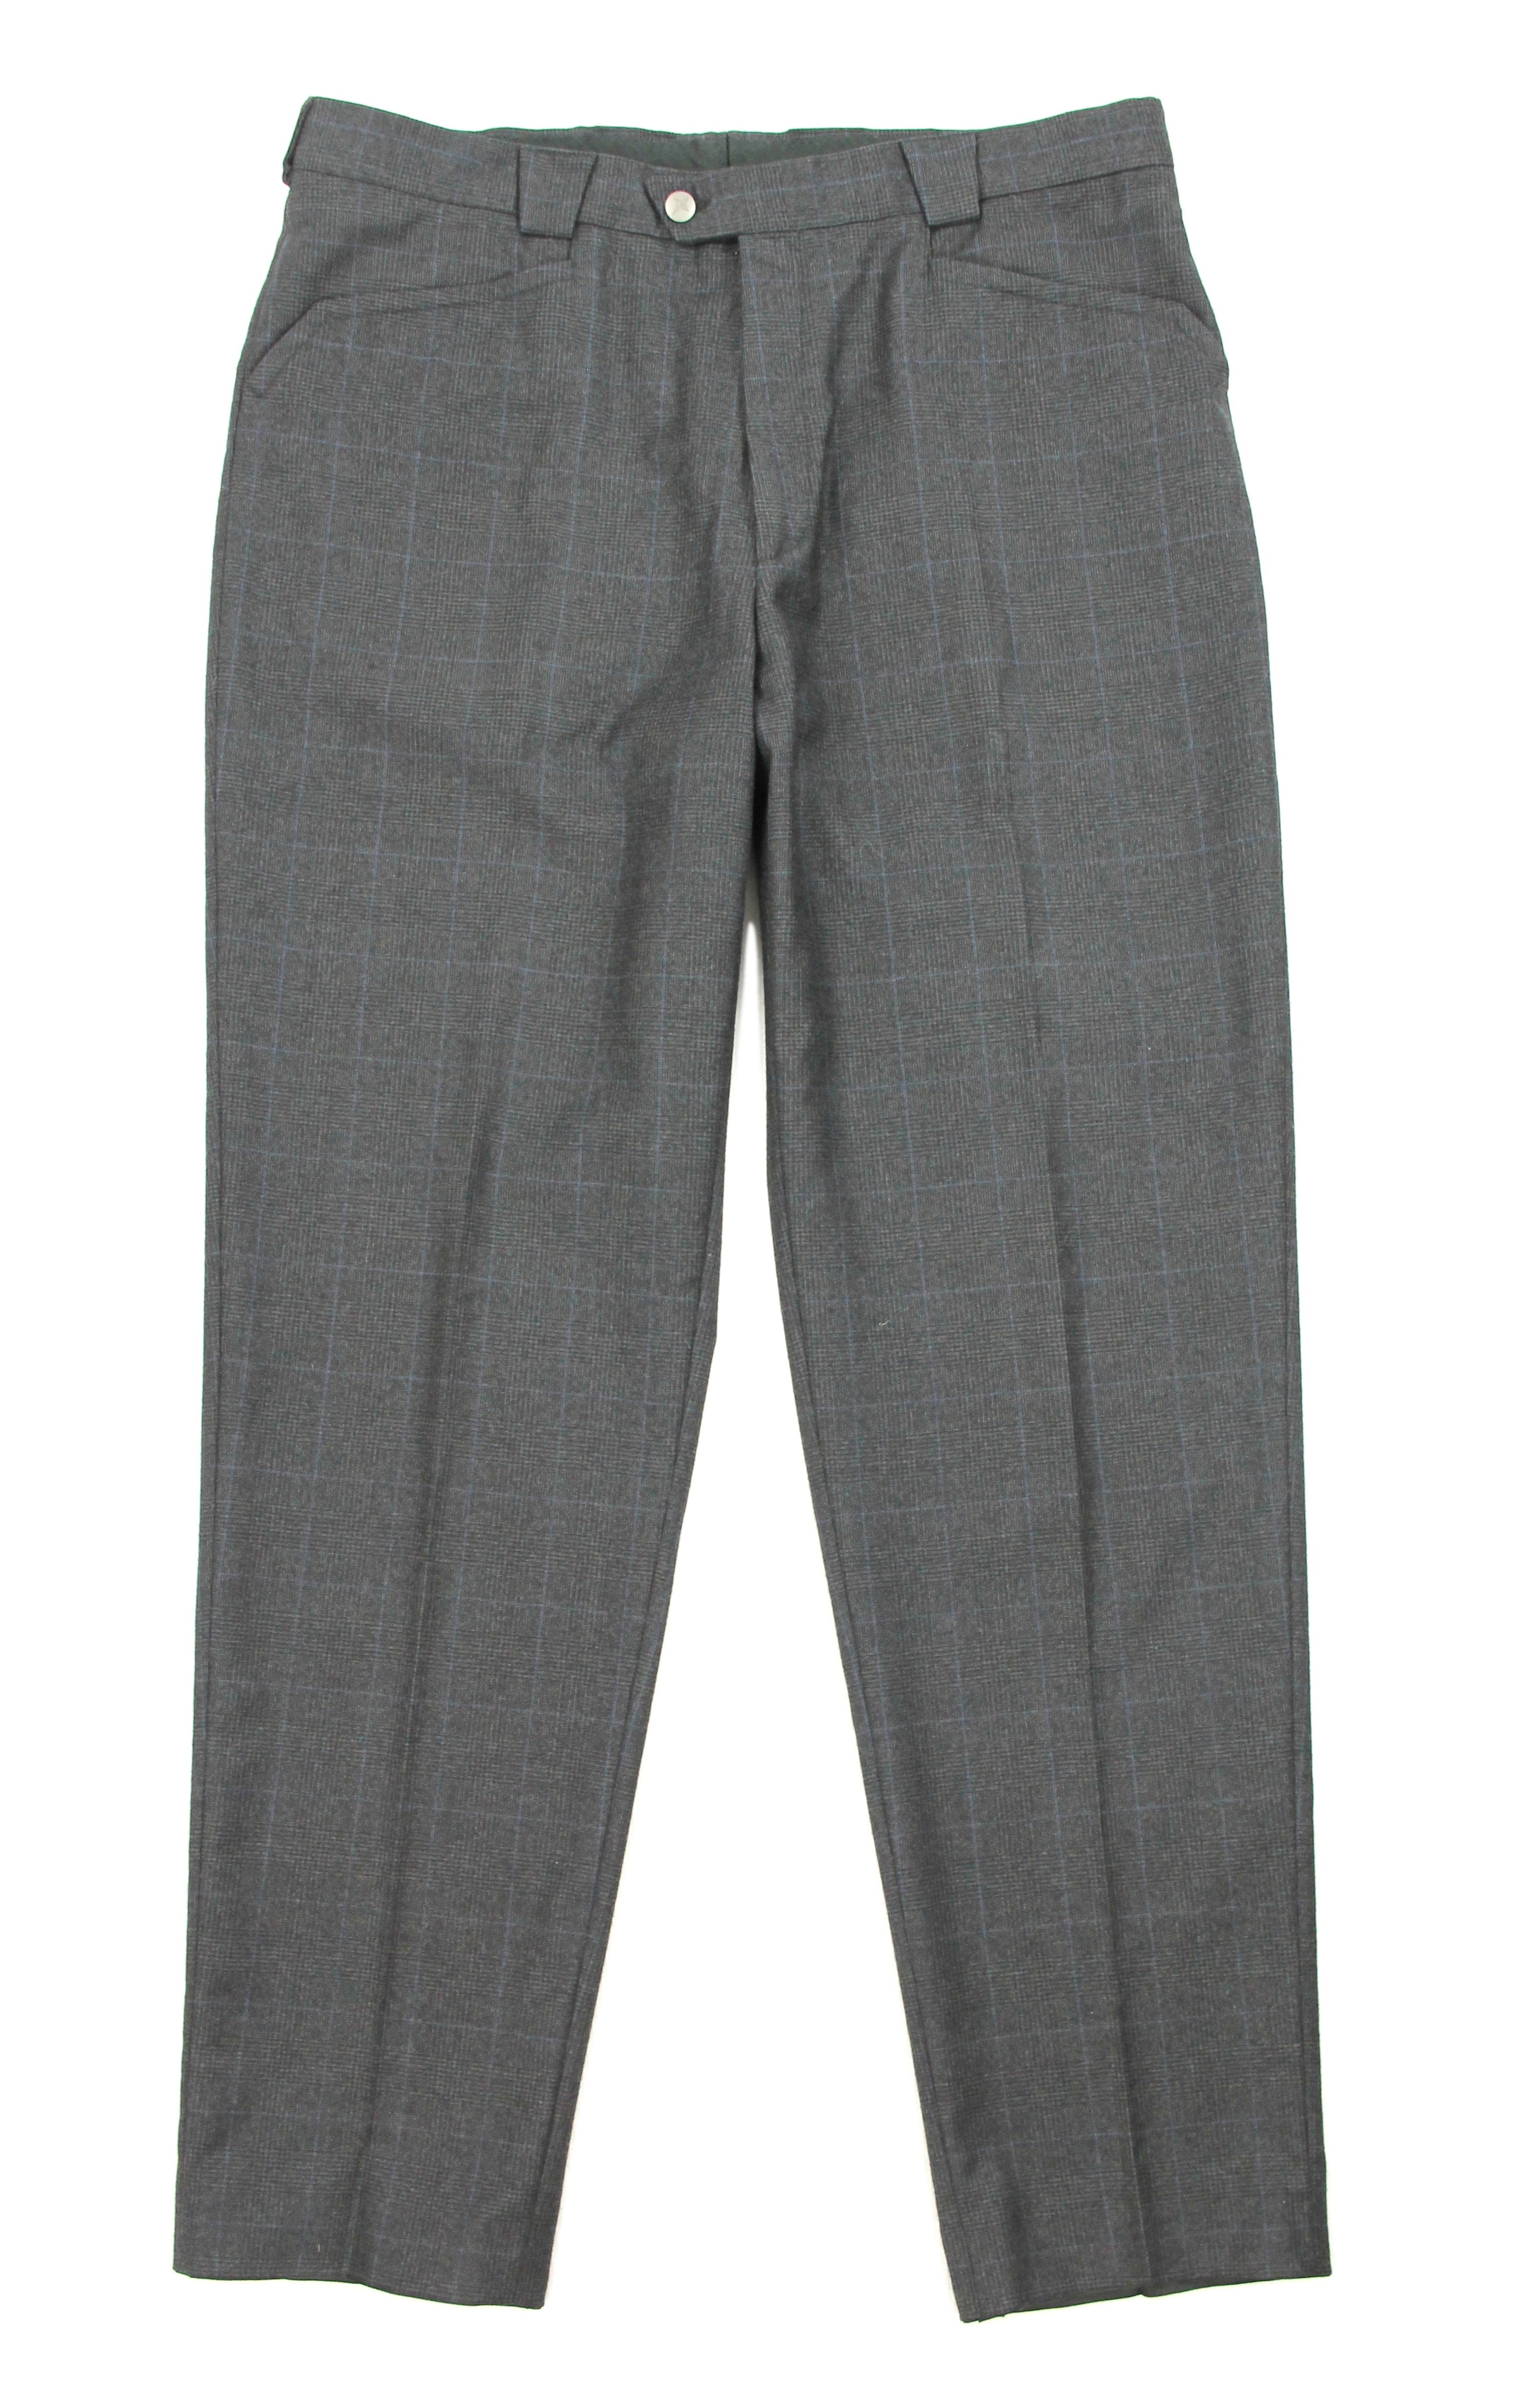 Thierry Mugler Flat Front Glen Check Wool Pants, SIZE EU 54R, US 36R